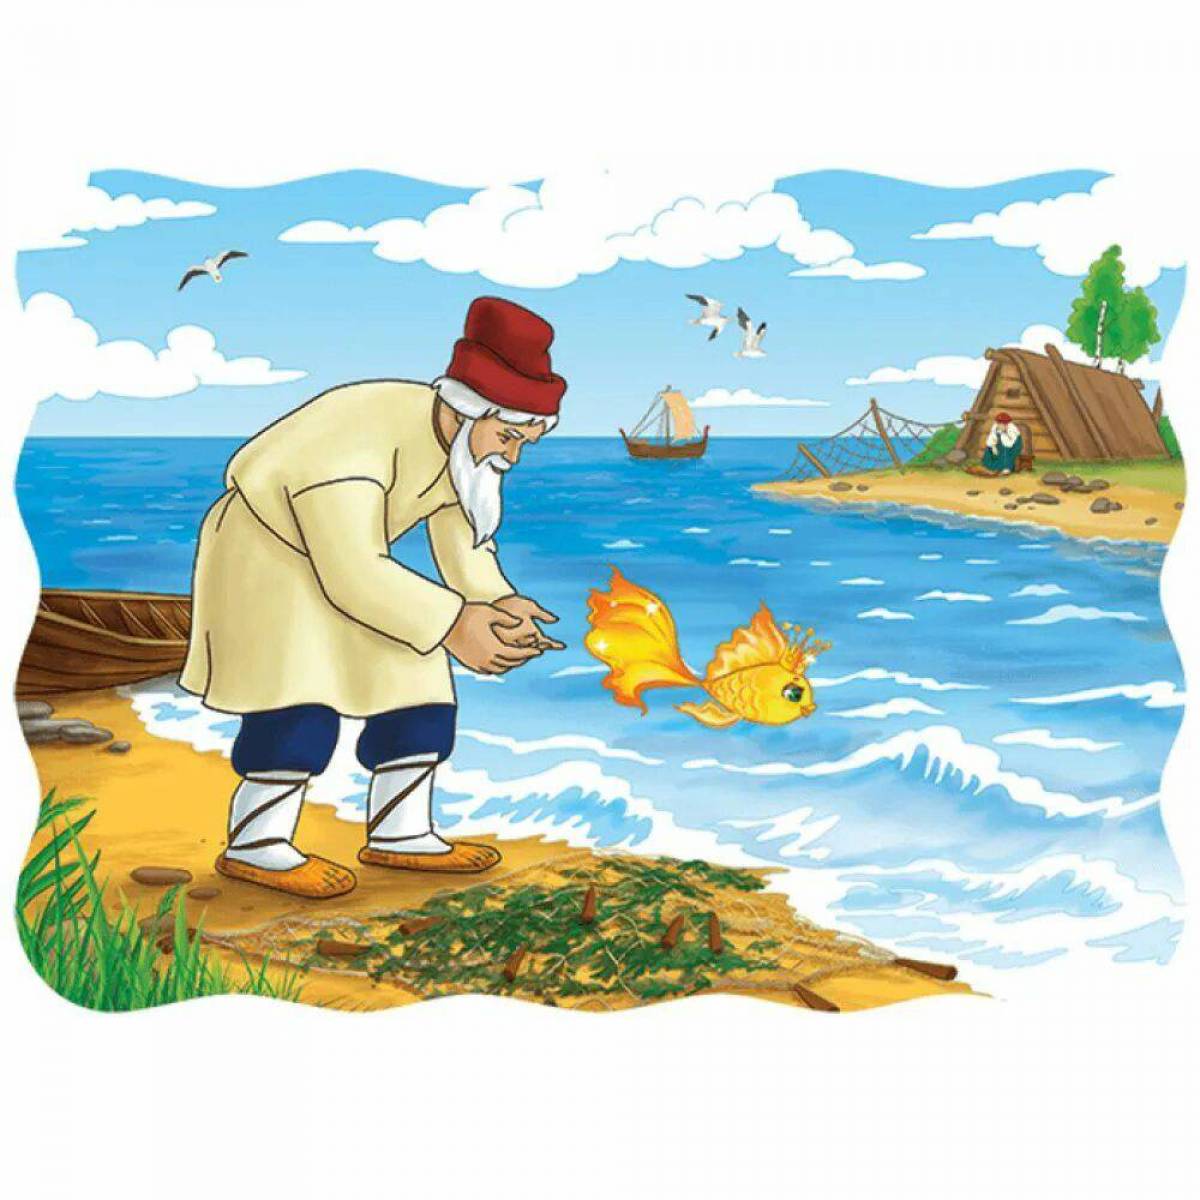 Рисунок золотой рыбки из сказки - Золотая рыбка картинка рисунок раскраска (46 фото) . malino-v.ru